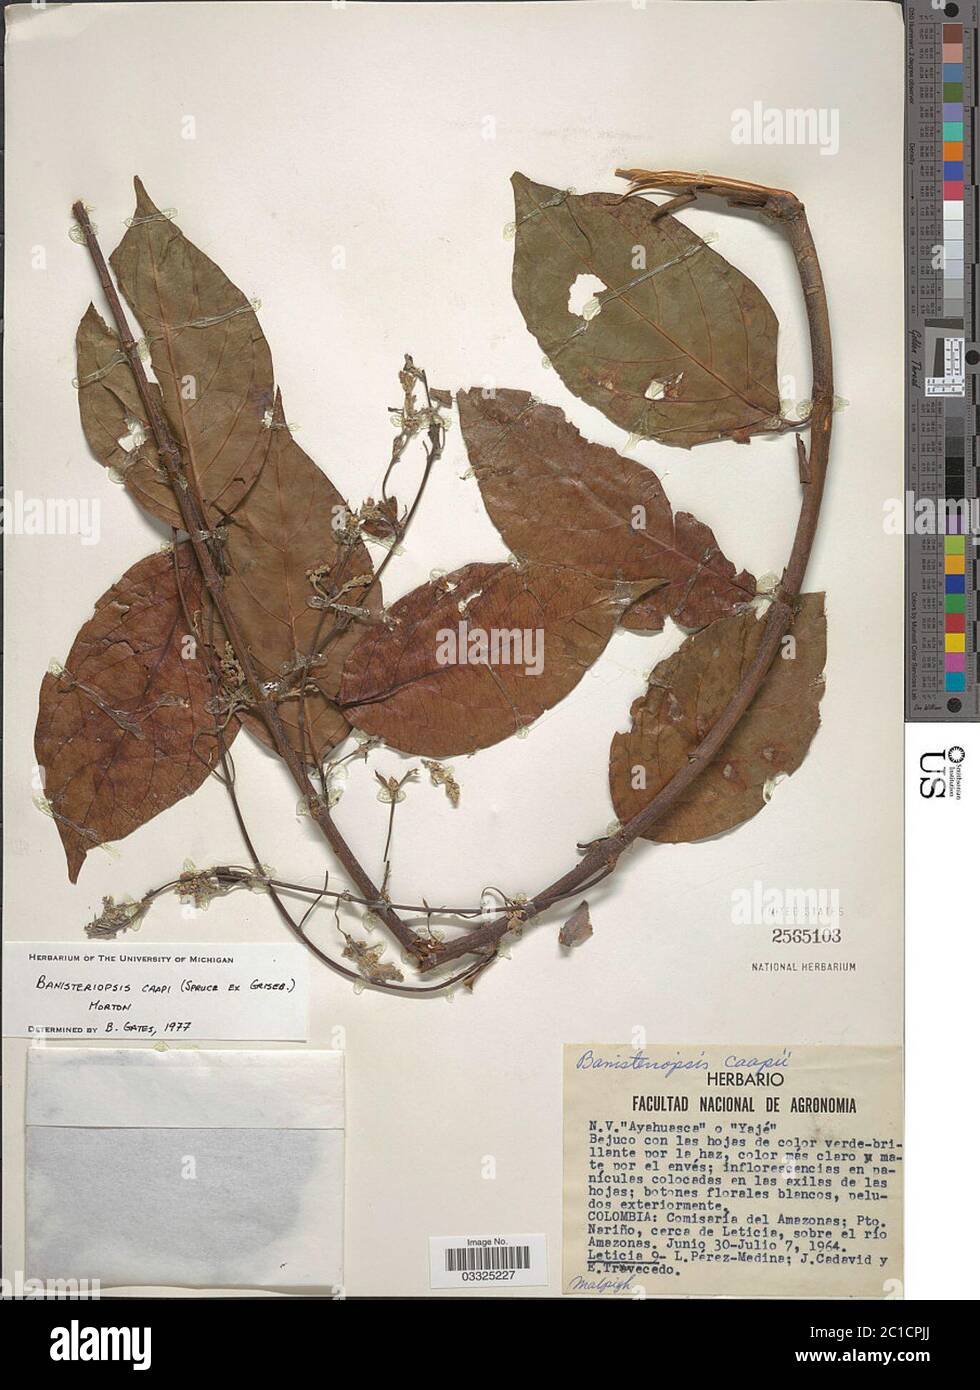 Banisteriopsis caapi Abete ex Grigib CV Morton Banisteriopsis caapi Abete ex Grigeb CV Morton. Foto Stock